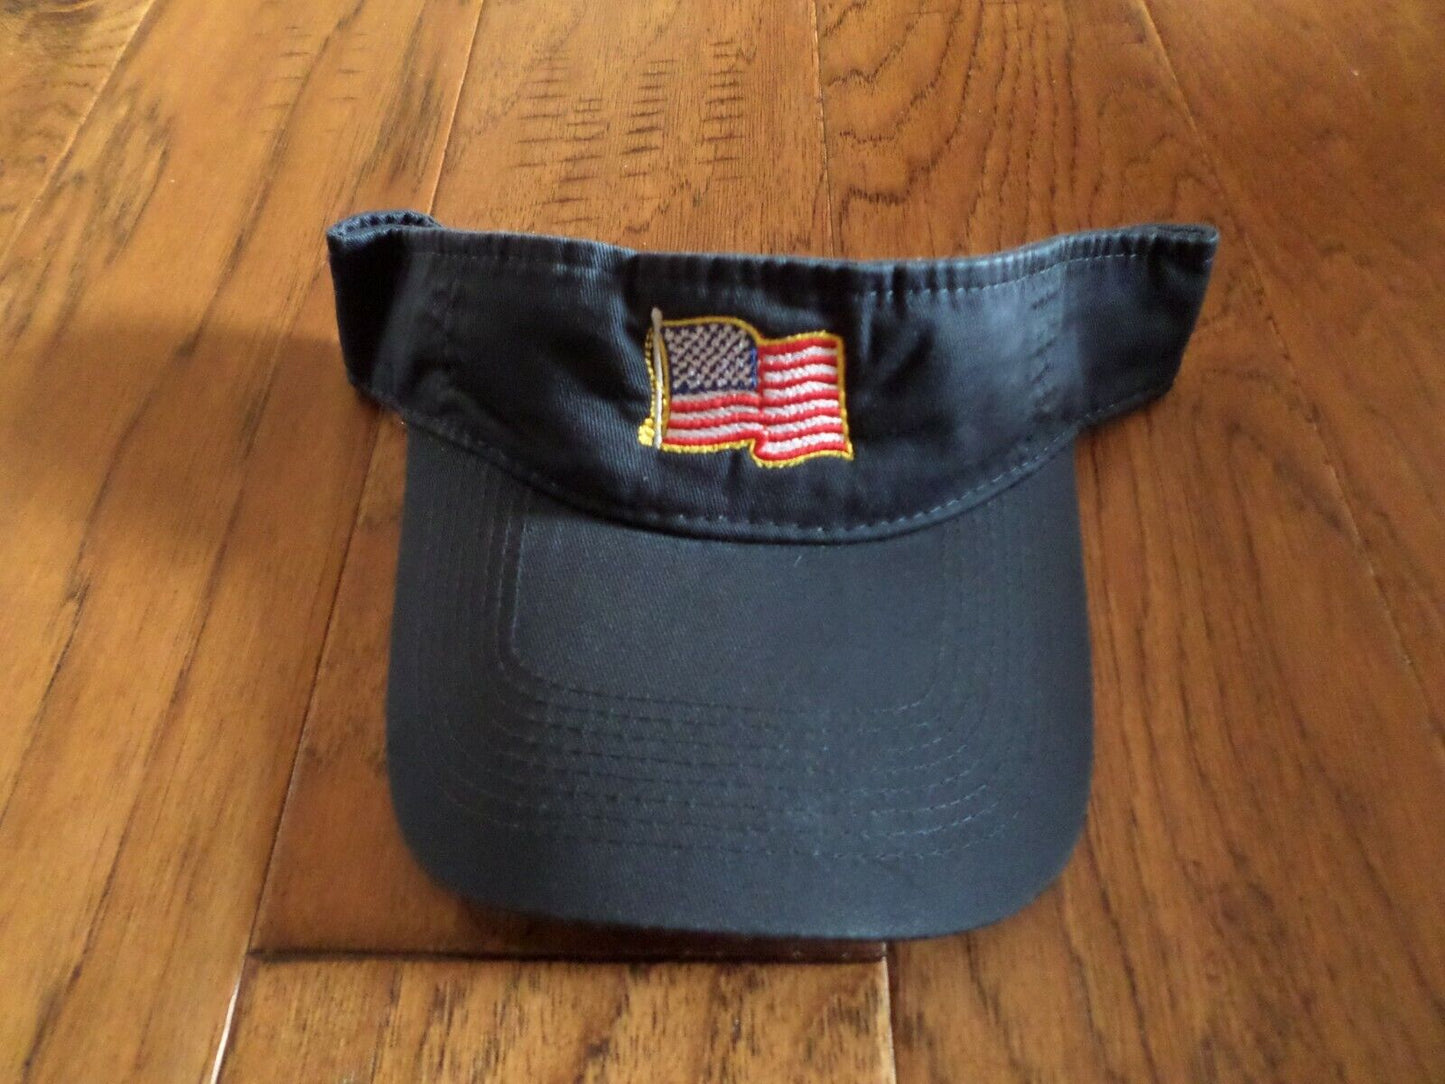 U.S FLAG SUN VISOR CAP BLUE HAT WITH EMBROIDERED UNITED STATES FLAG